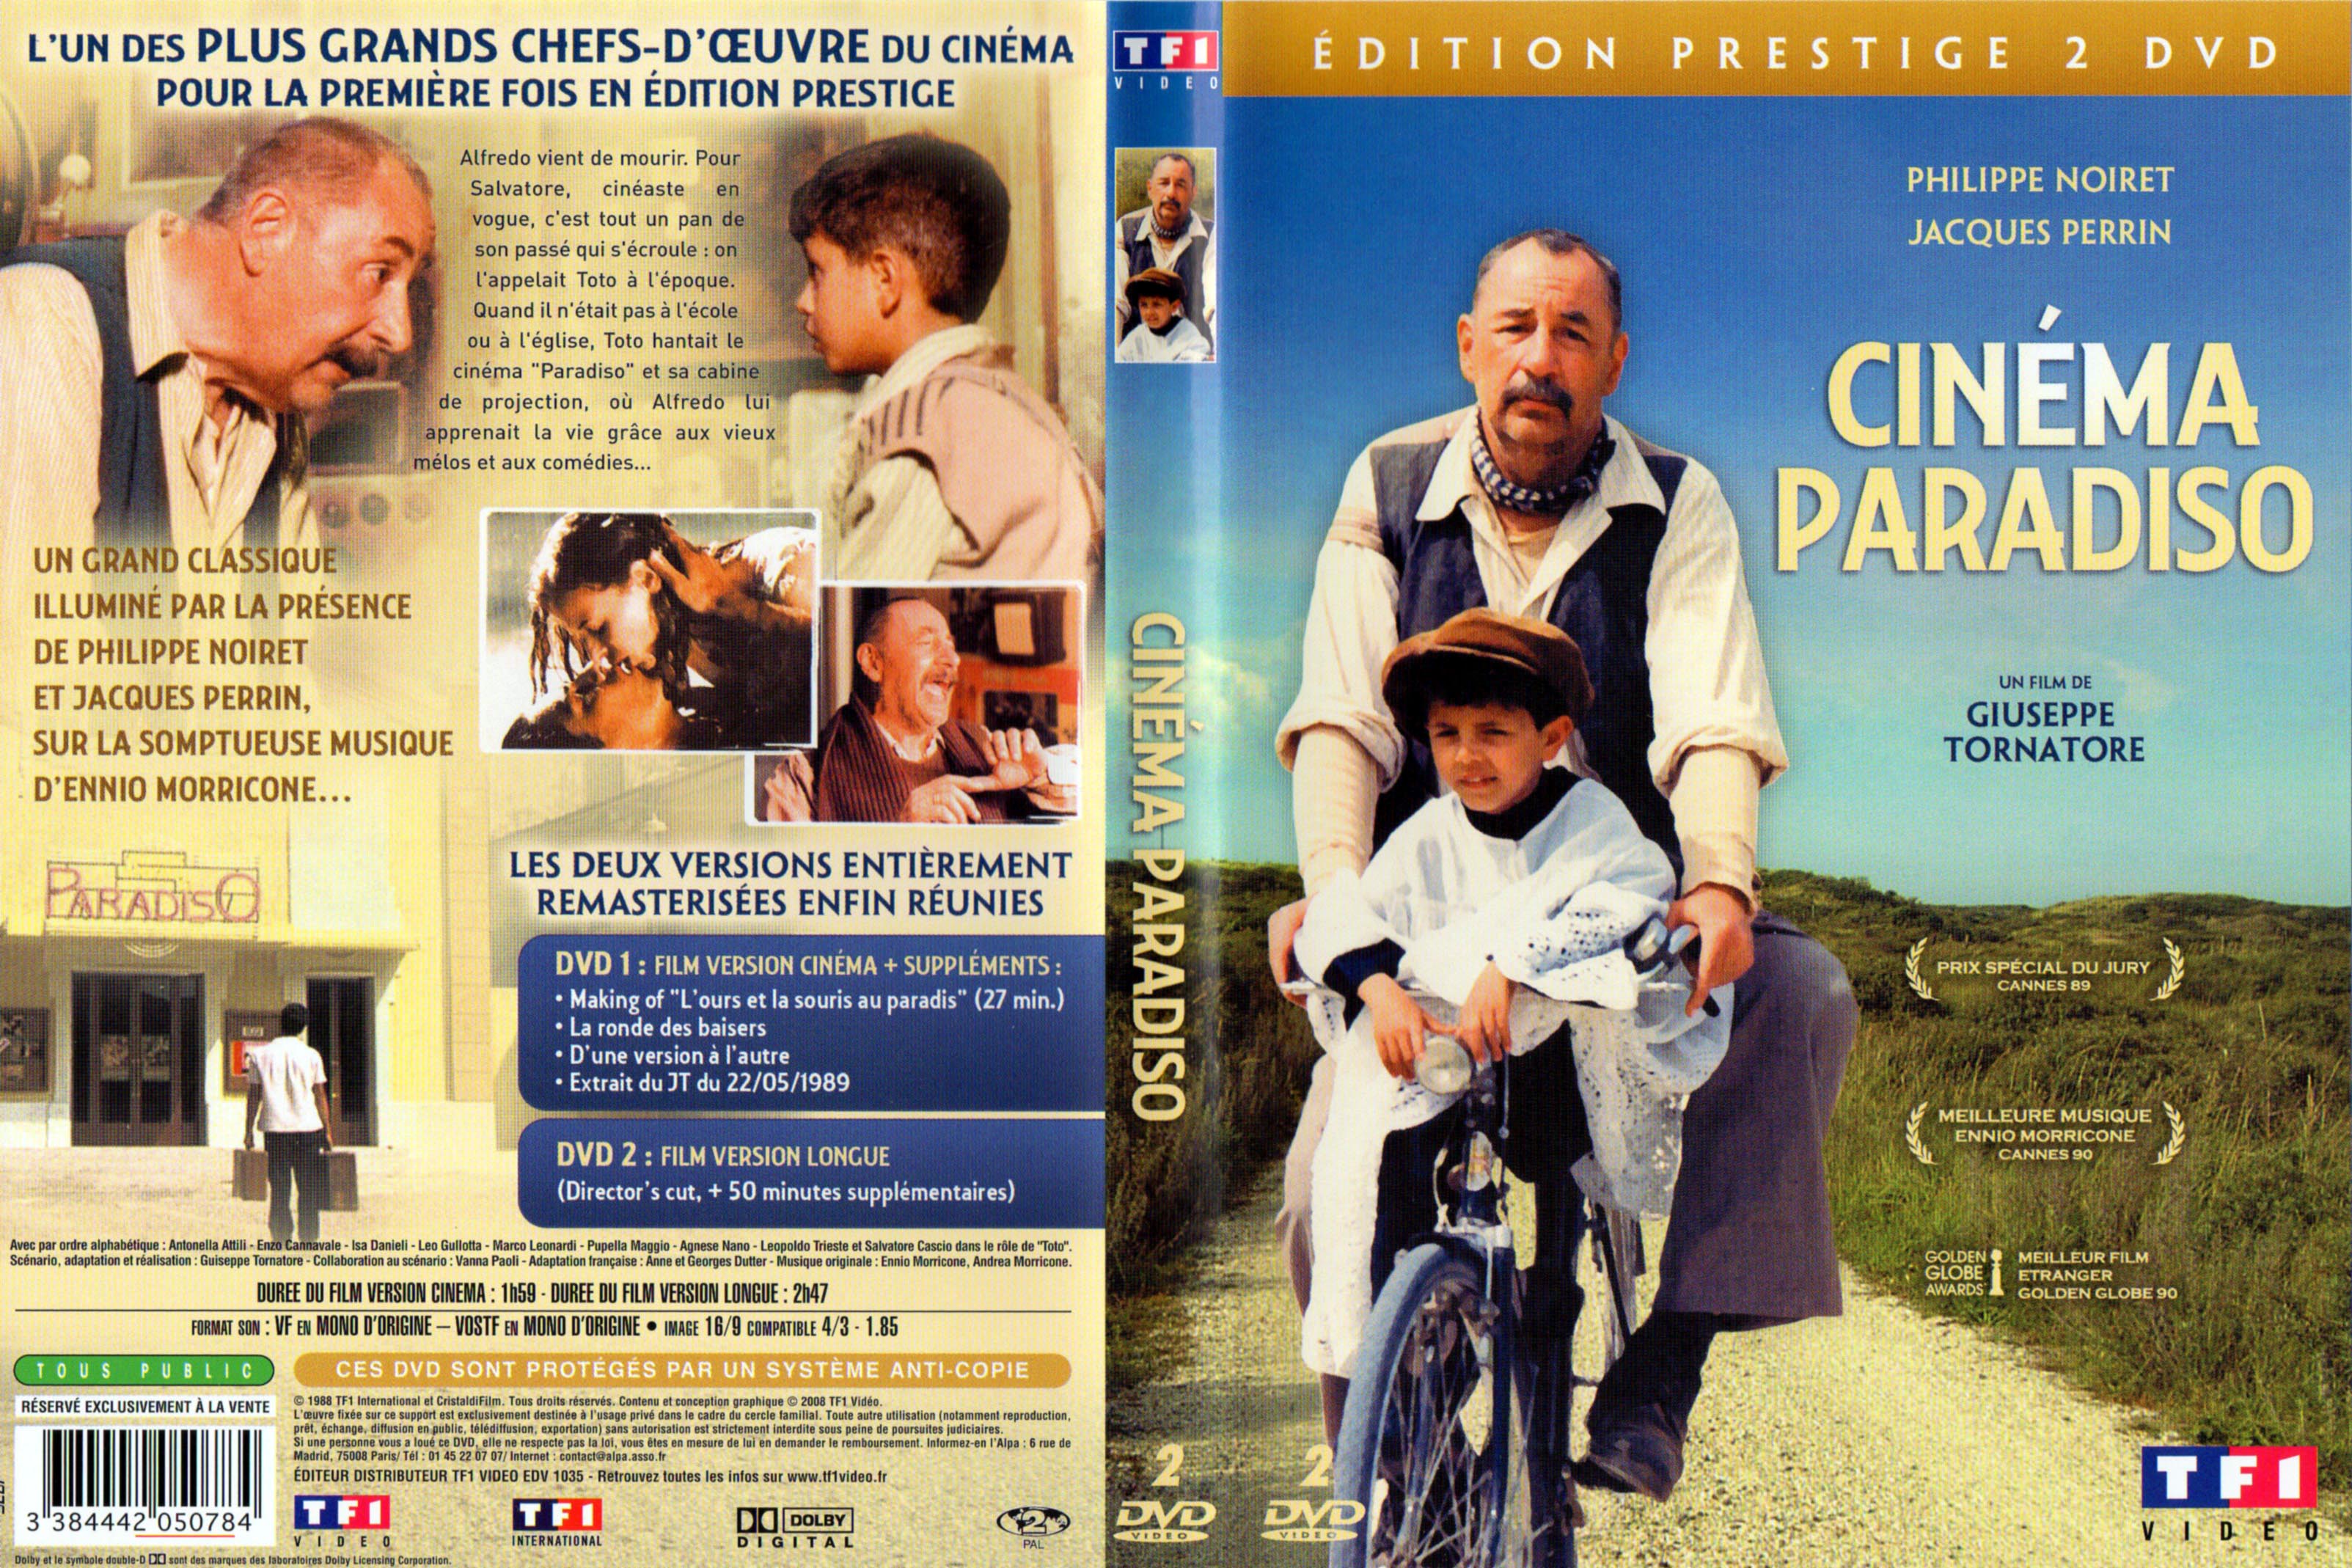 Jaquette DVD Cinema Paradiso v2